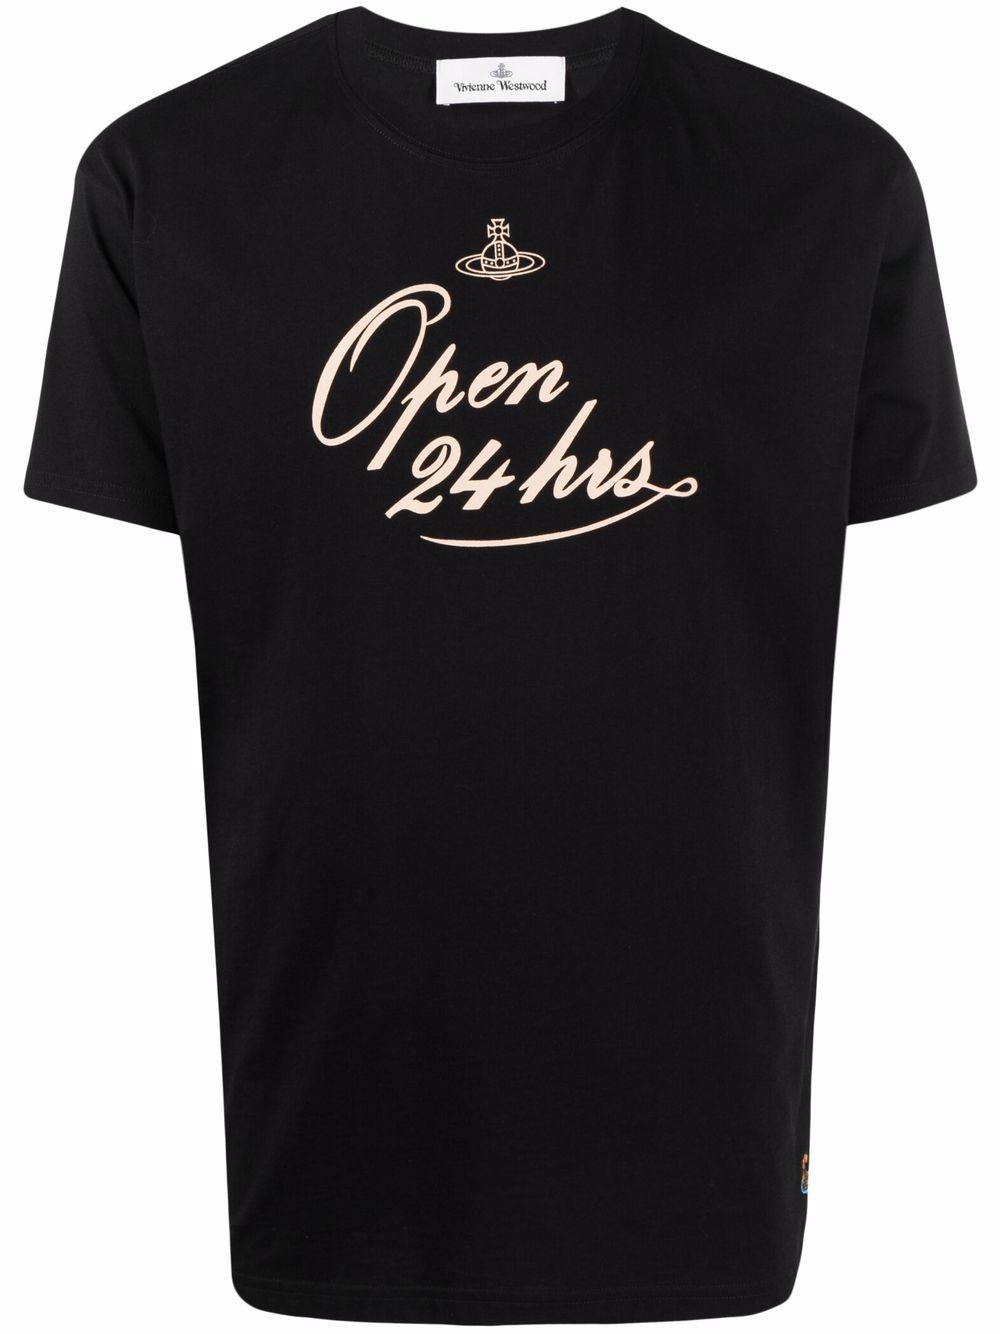 Vivienne Westwood Open 24 Hours Print T-shirt - Farfetch